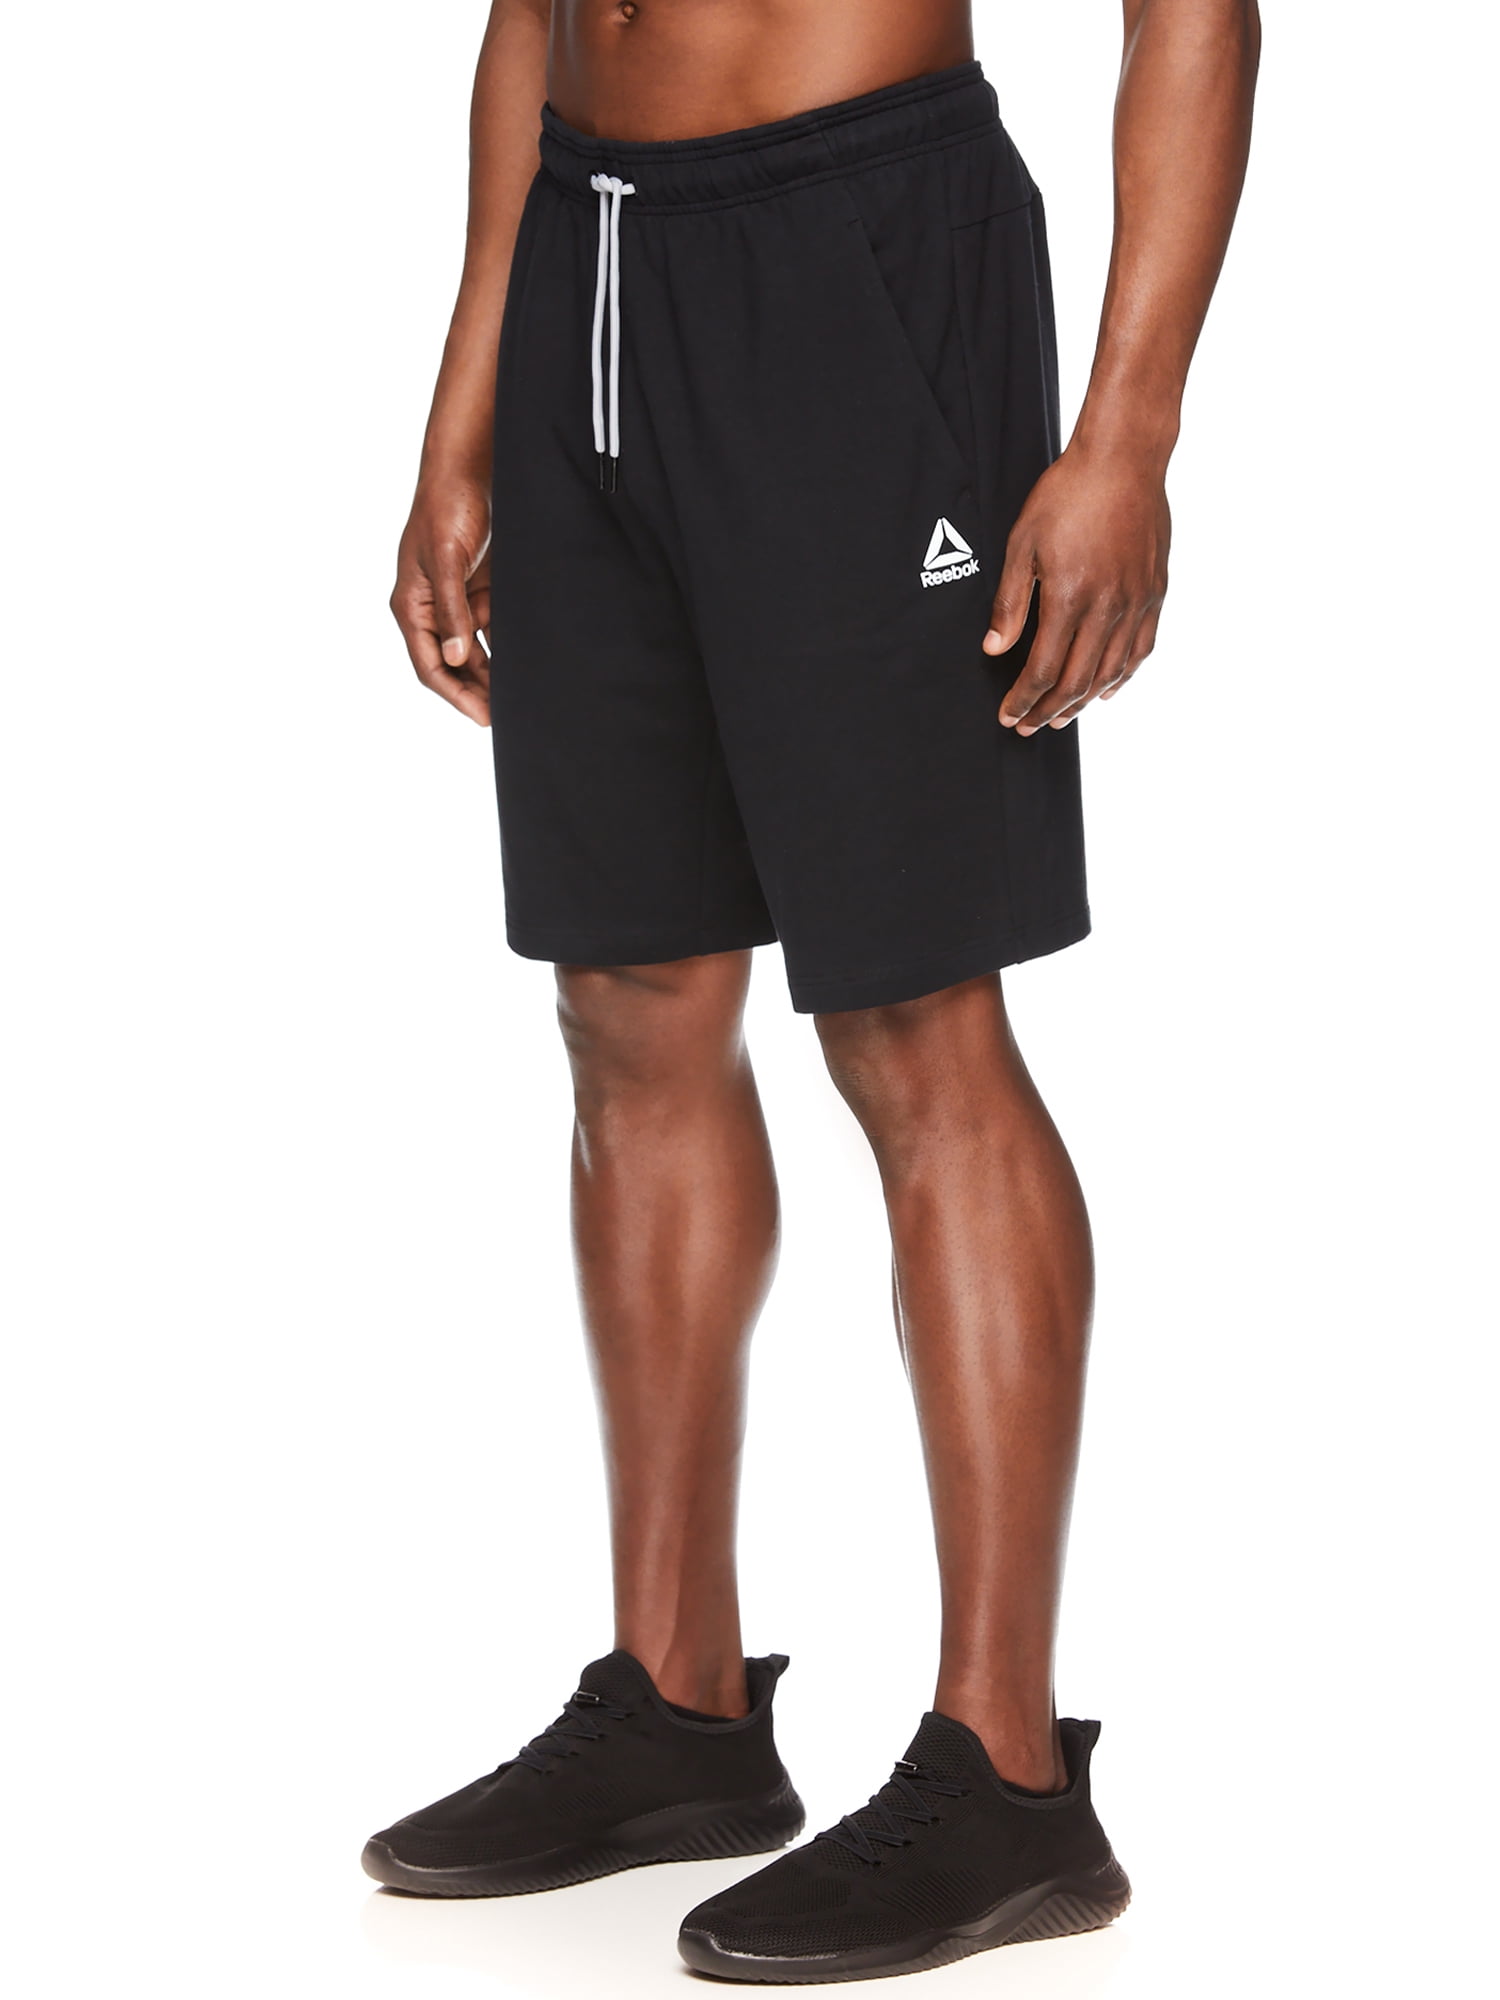 Reebok Men's and Big Men's Active Stretch Training Shorts, 10" up to 3XL Walmart.com